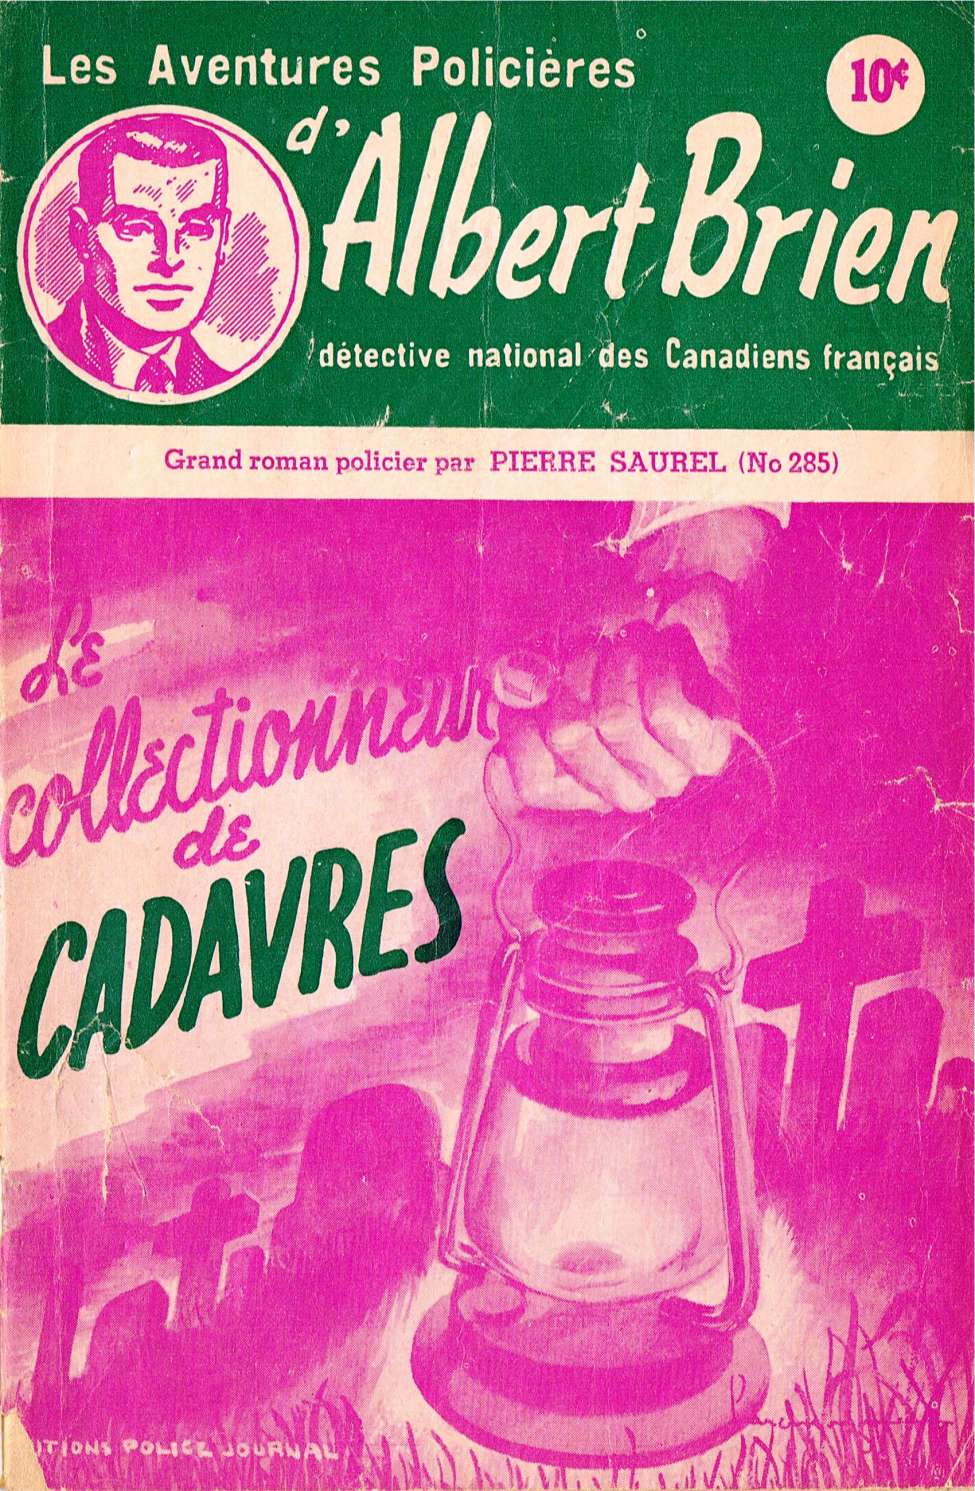 Book Cover For Albert Brien v2 285 - Le collectionneur de cadavres